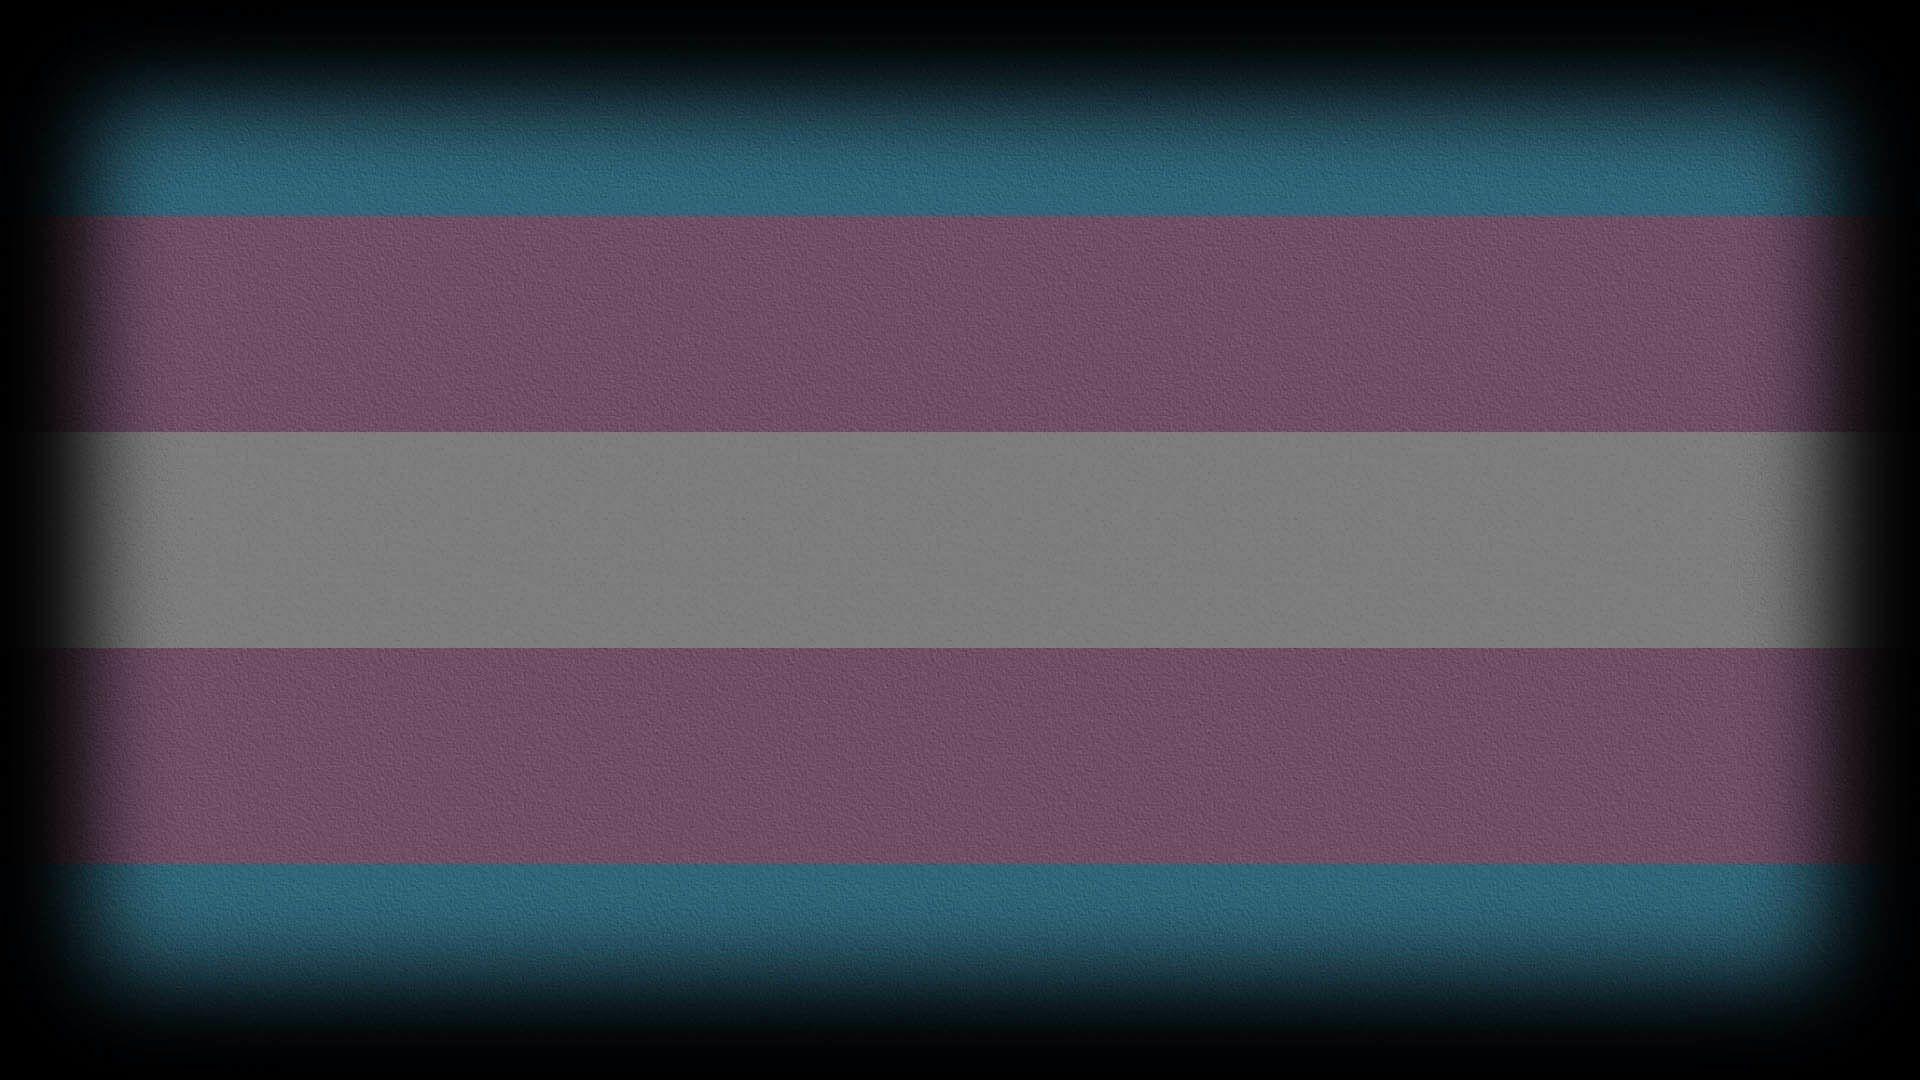 Transgender Pride Gay  Free image on Pixabay  Pixabay